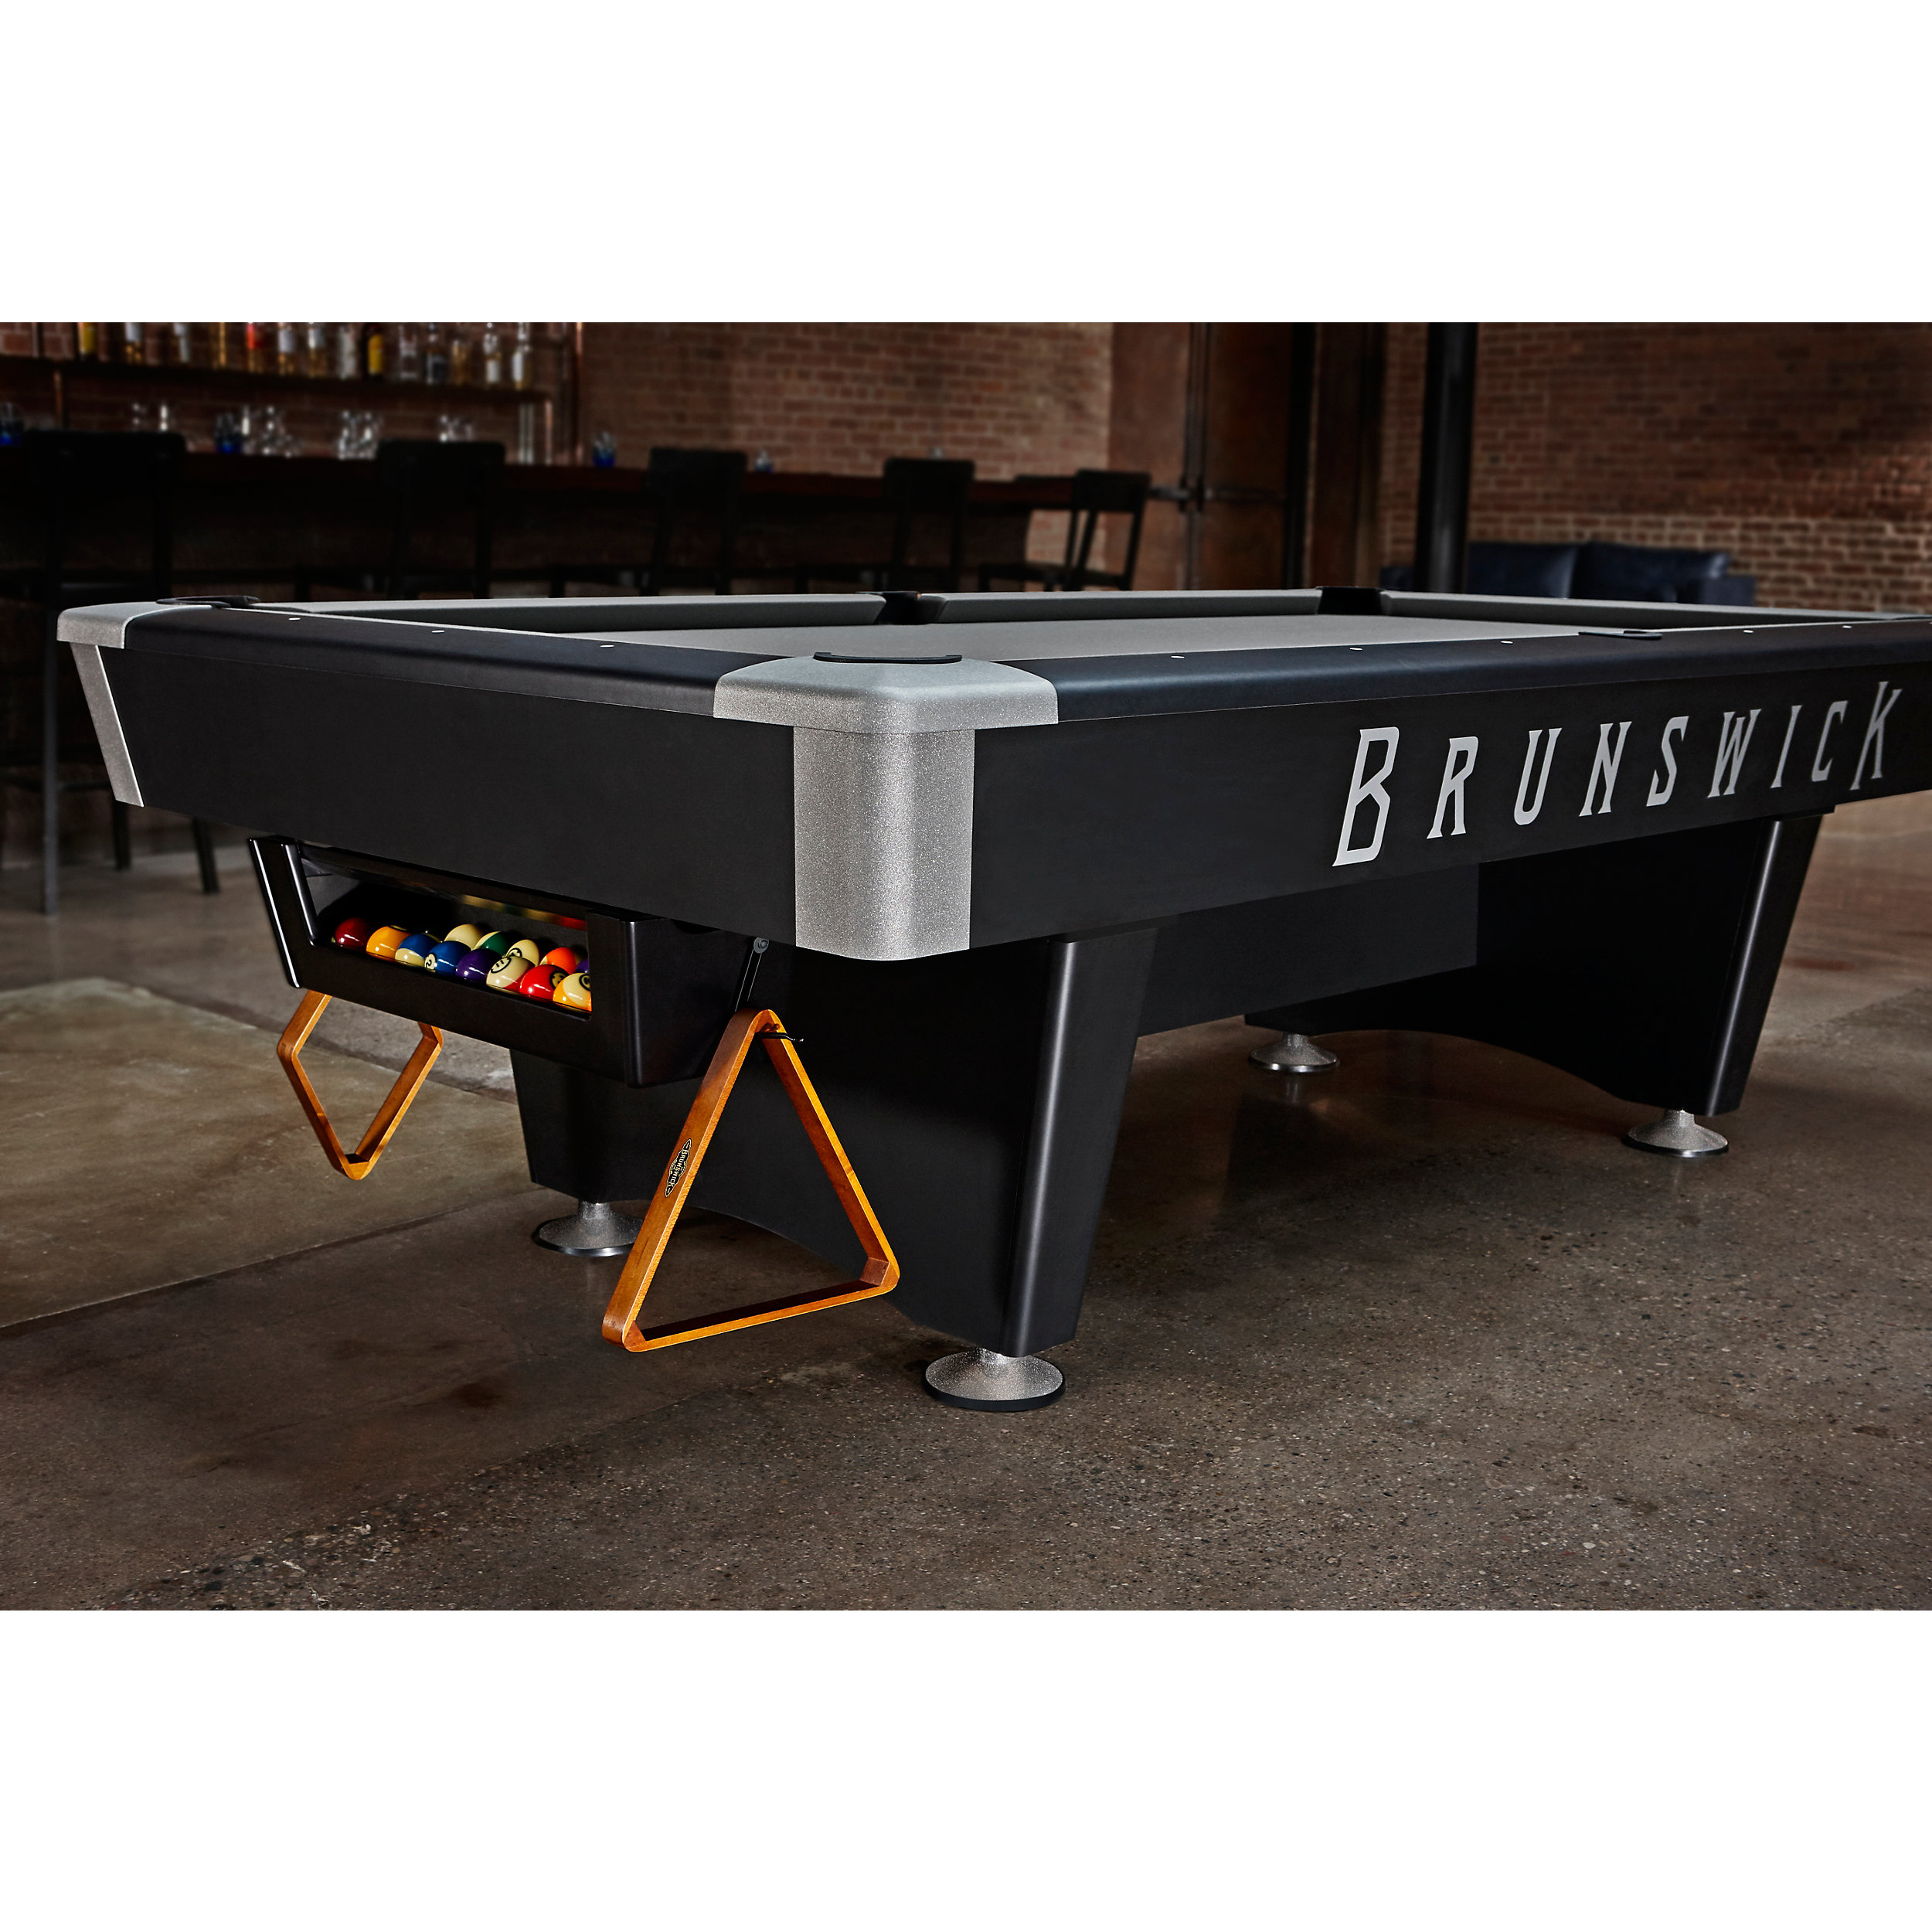 Brunswick pool table installation manual